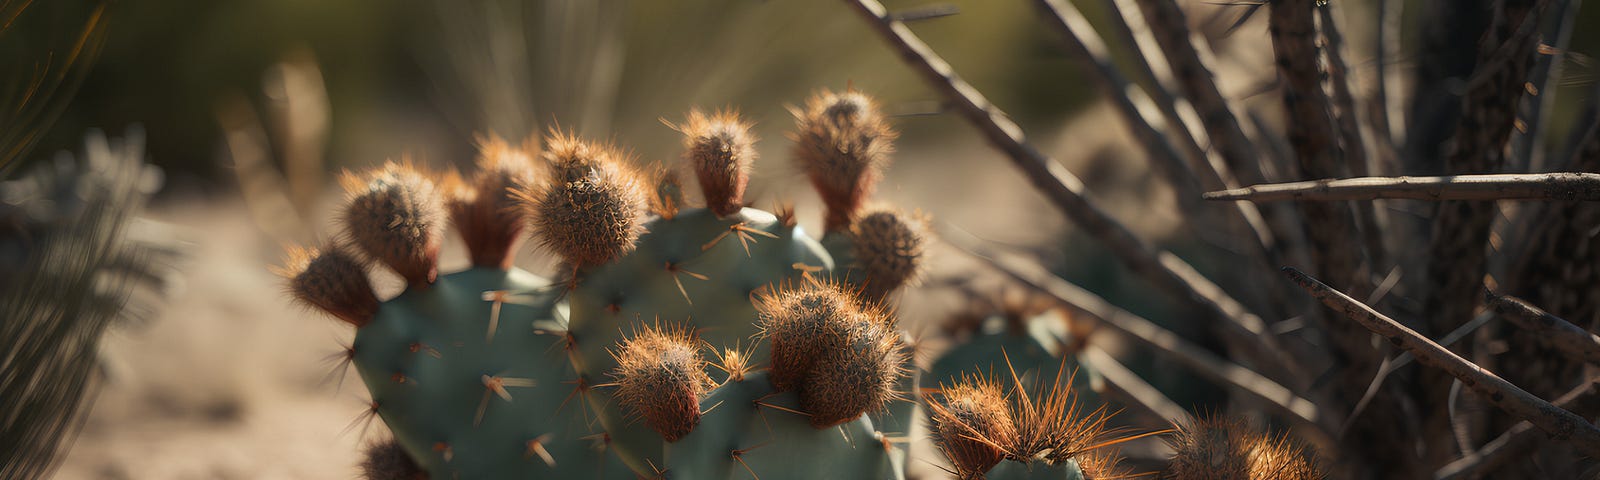 Prickly pear cactus in Sonoran Desert, Arizona.